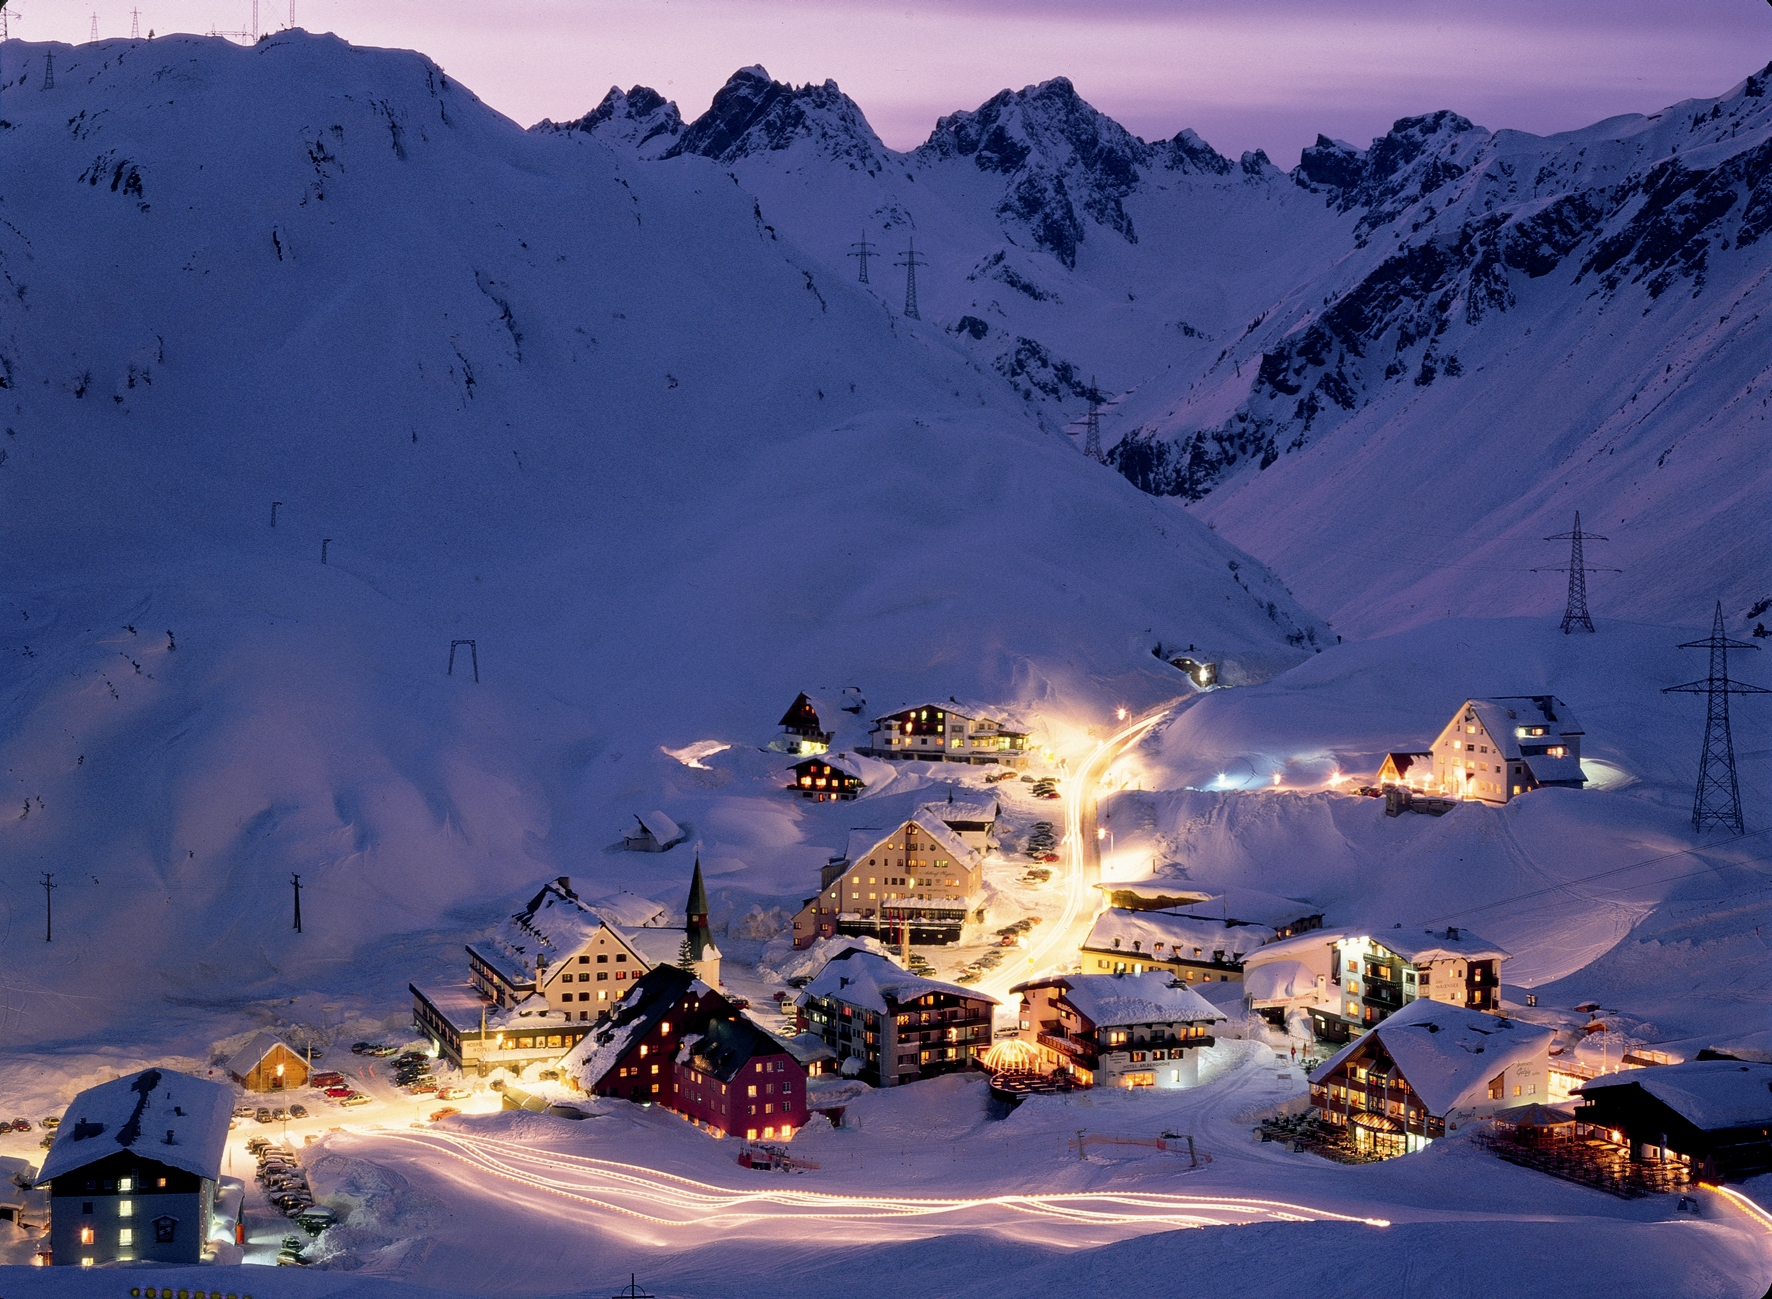 world___austria_evening_lights_at_the_ski_resort_of_st-_anton__austria_070305_